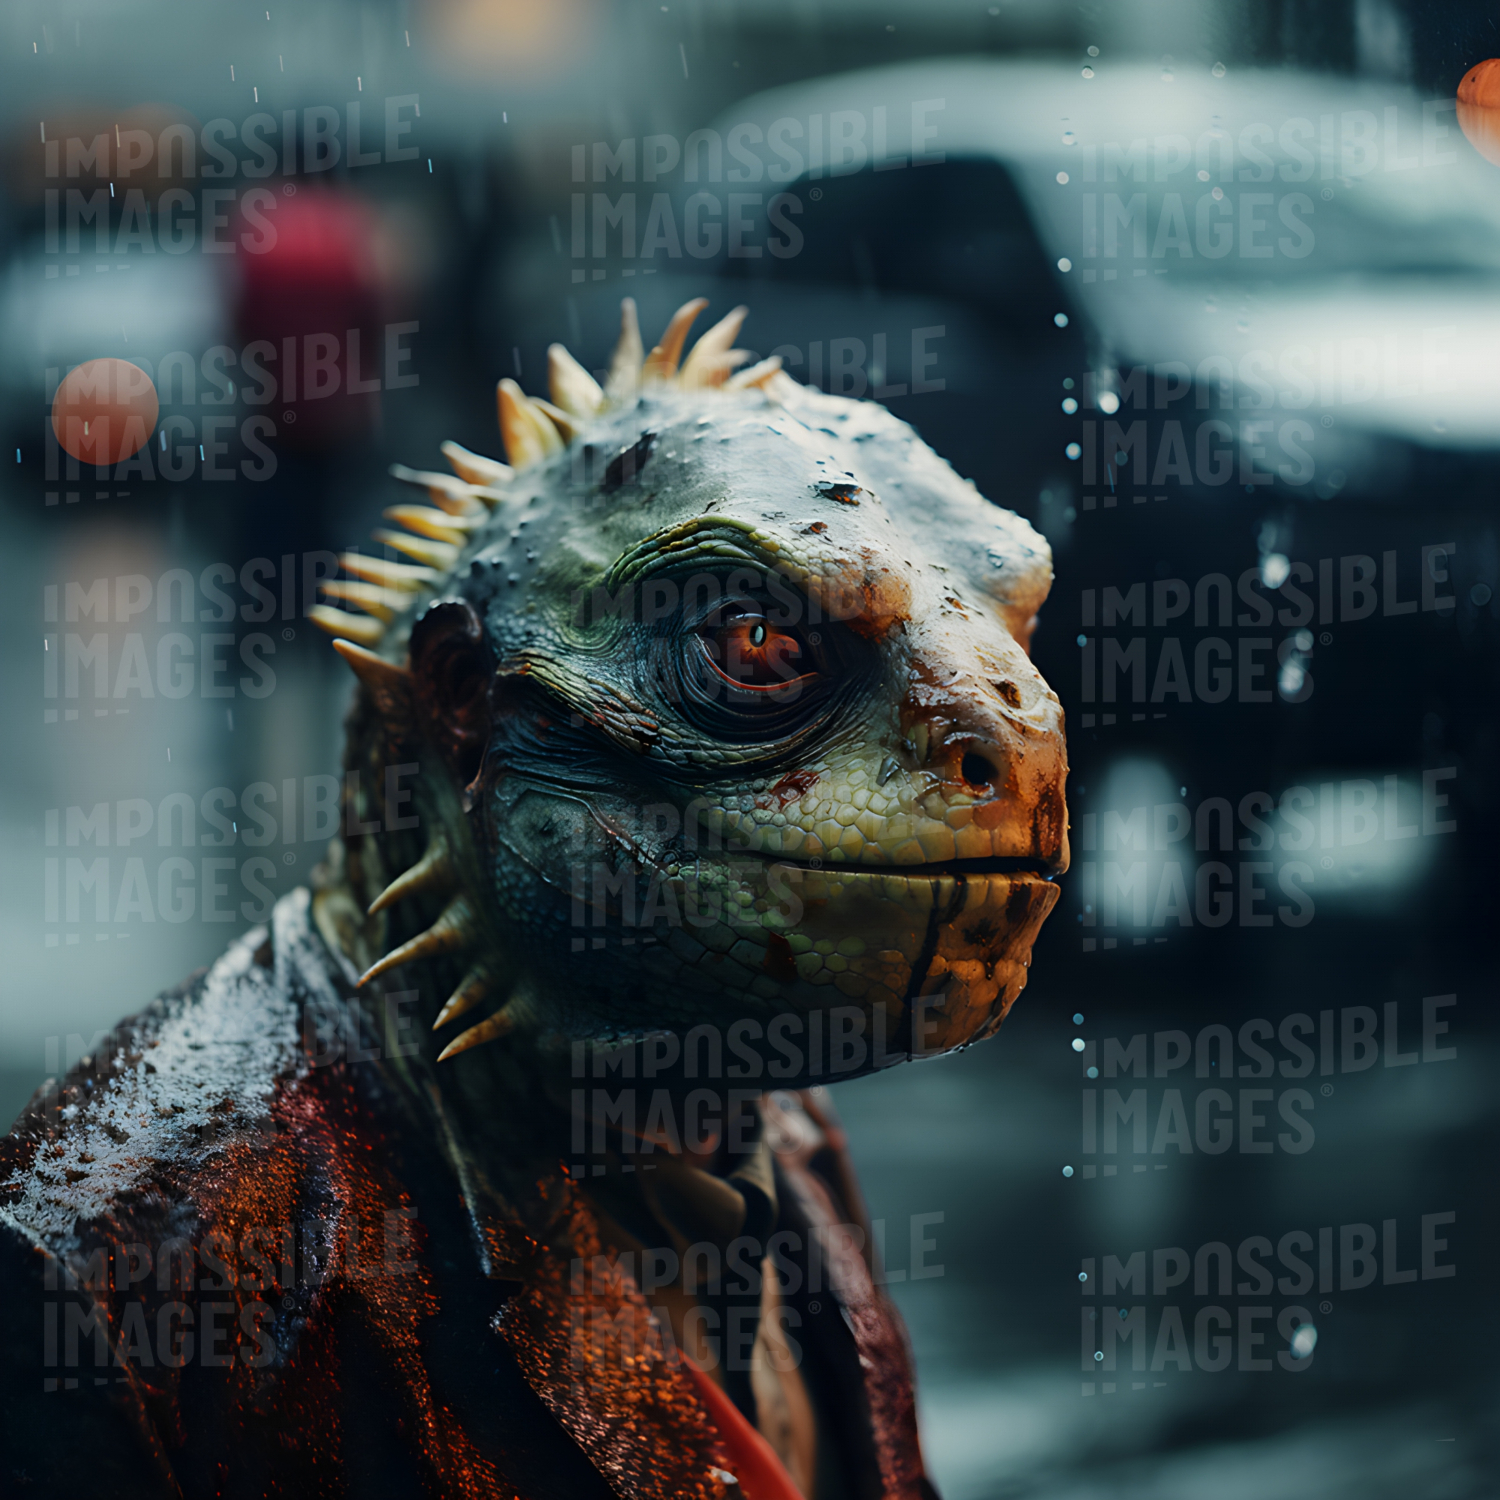 Reptile man stood in a rainy city street